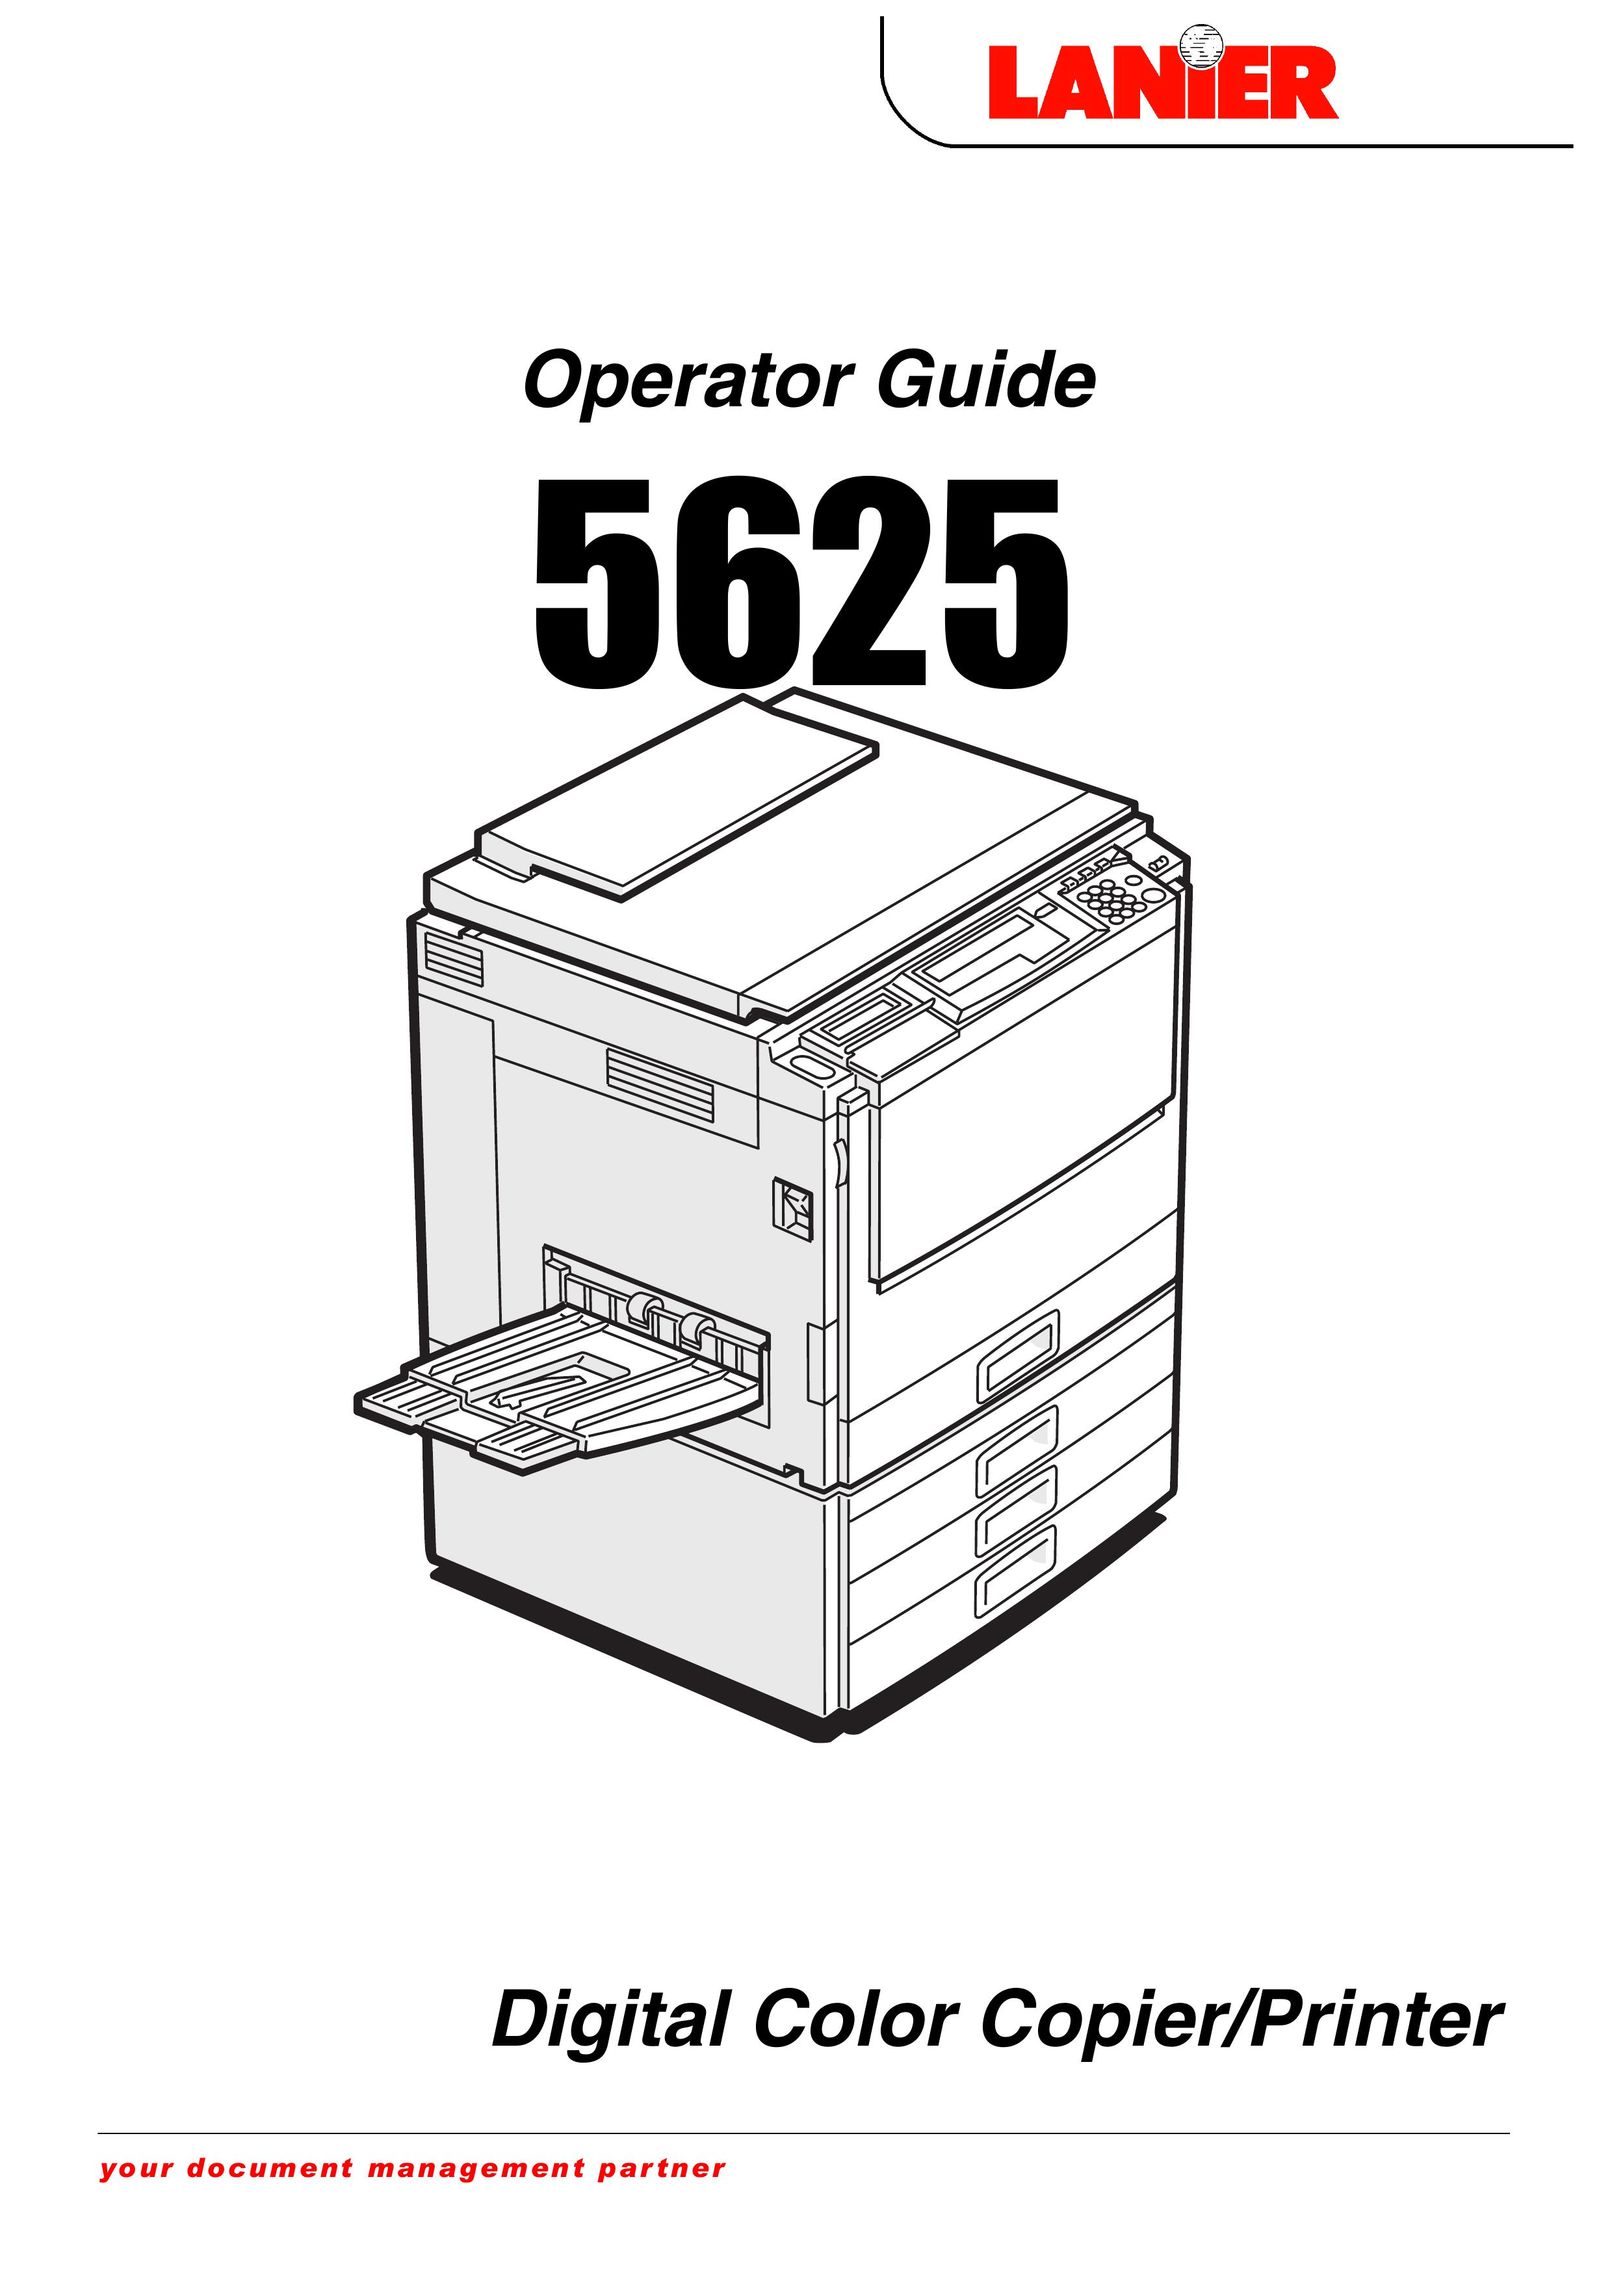 Lanier 5625 All in One Printer User Manual